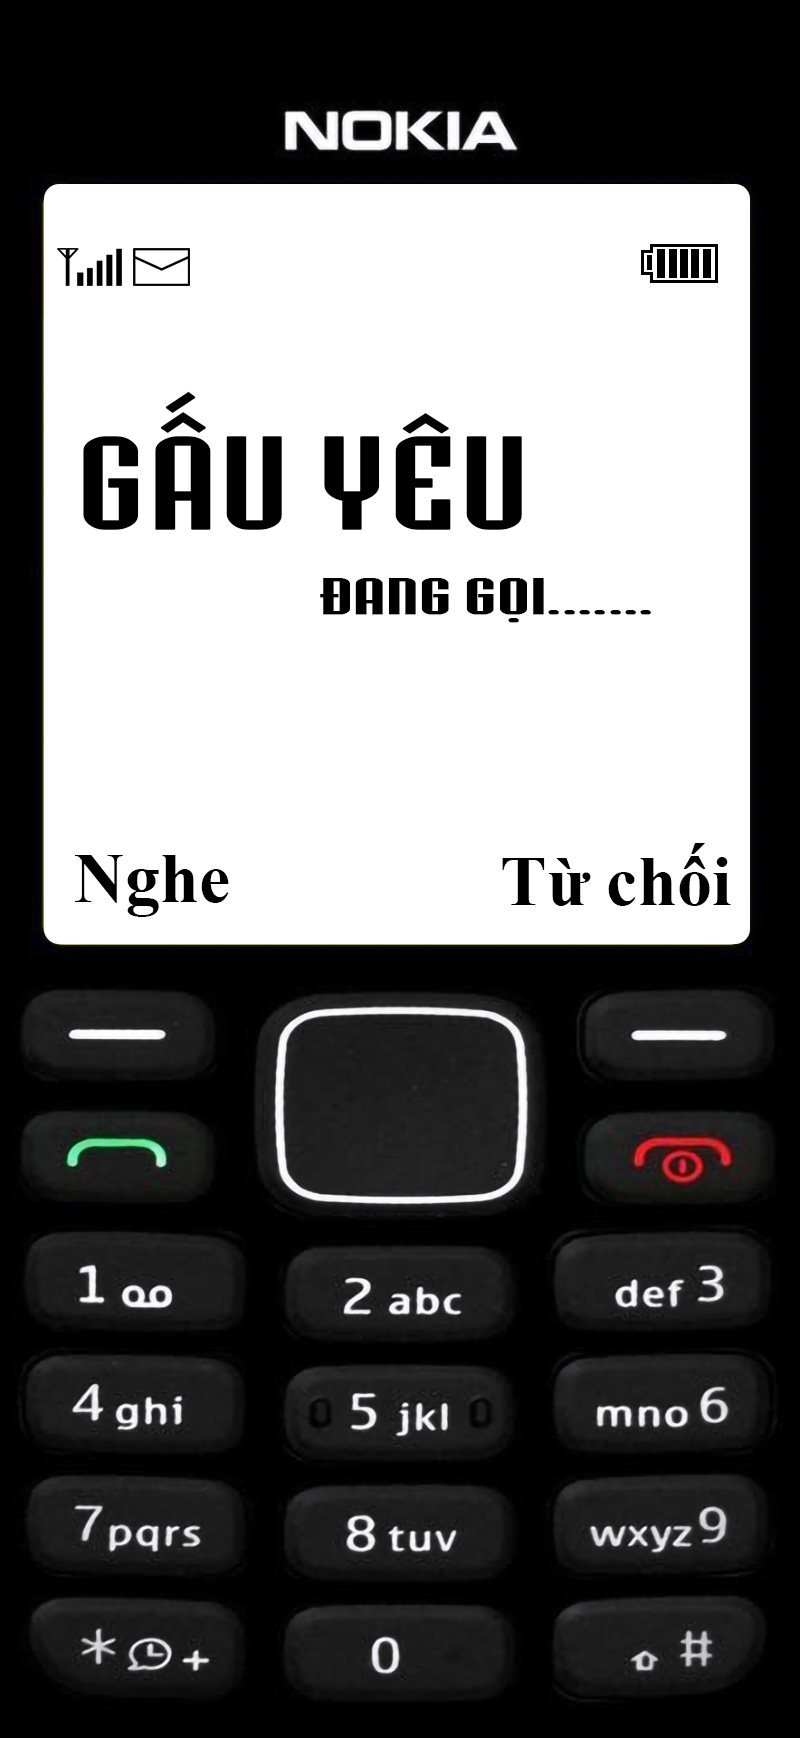 b8-hinh-nen-nokia-1280-cho-samsung-oppo-tren-iphone-anh-nen-nokia-1280-danh-cho-smartphone-dien-thoai-cam-ung.jpg